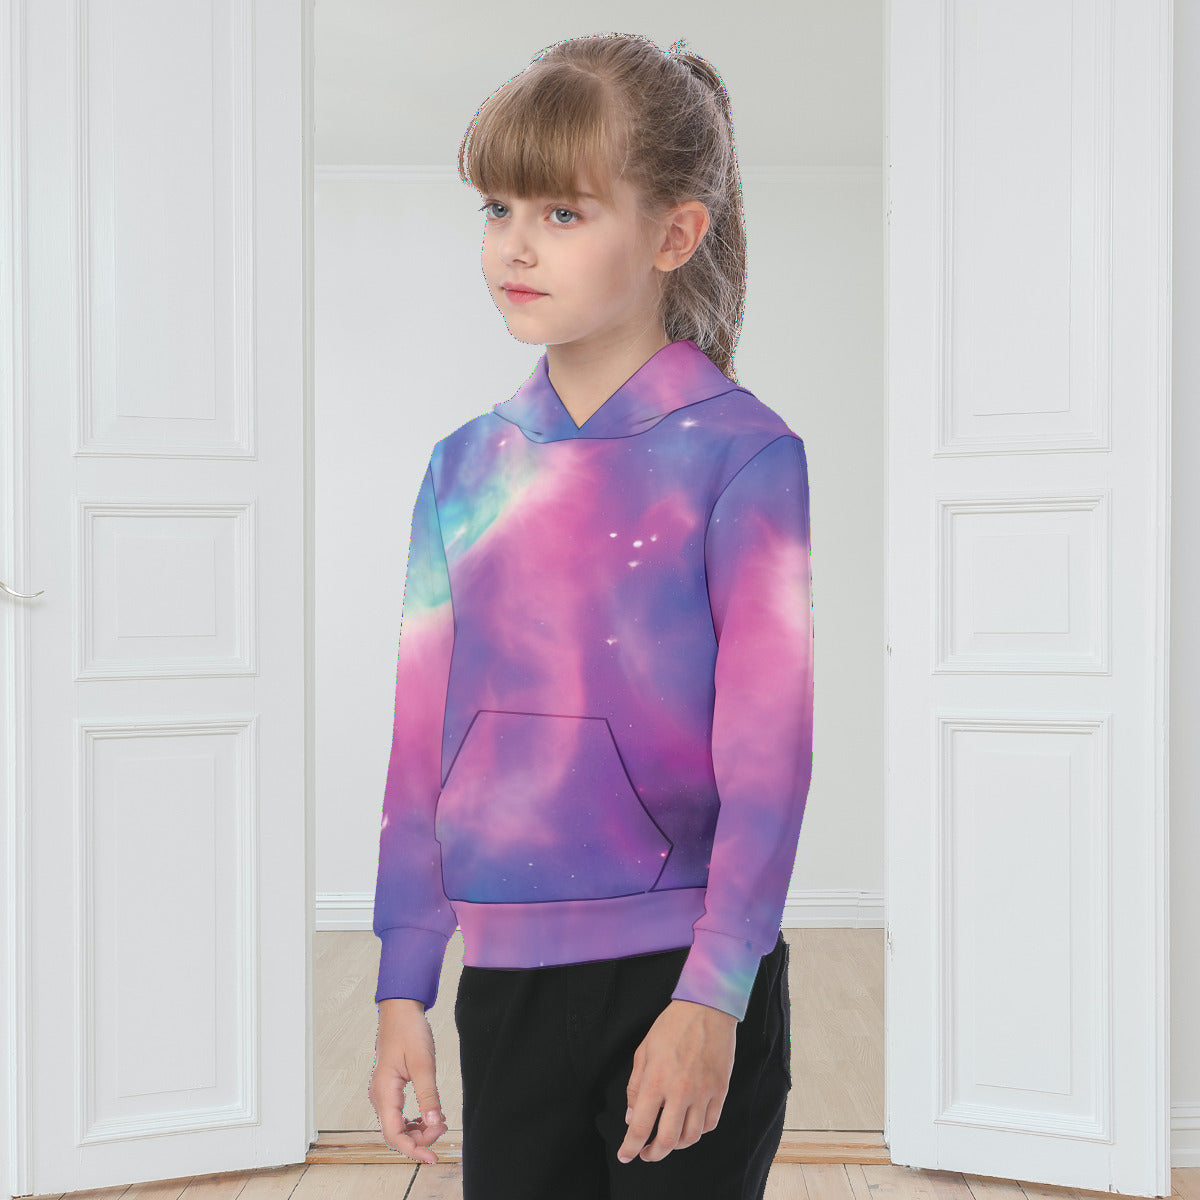 Vibrant Iridescent Nebula Cosmic Fashion Oversized Kid's Hoodie The Nebula Palace: Spiritually Cosmic Fashion